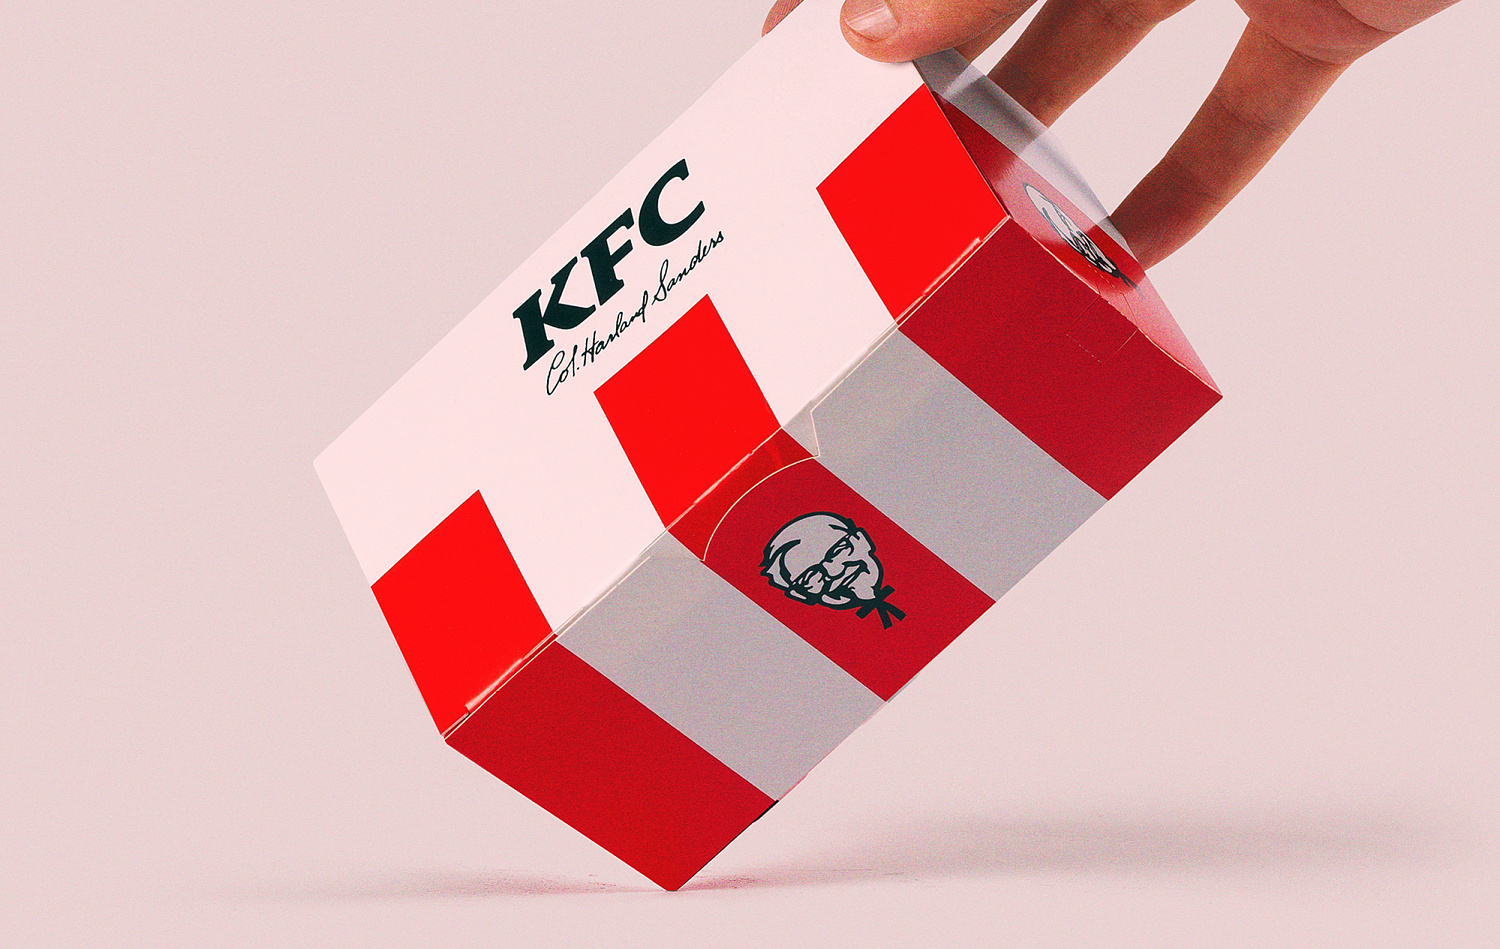 KFC rebranding in Russia - Портфолио Depot